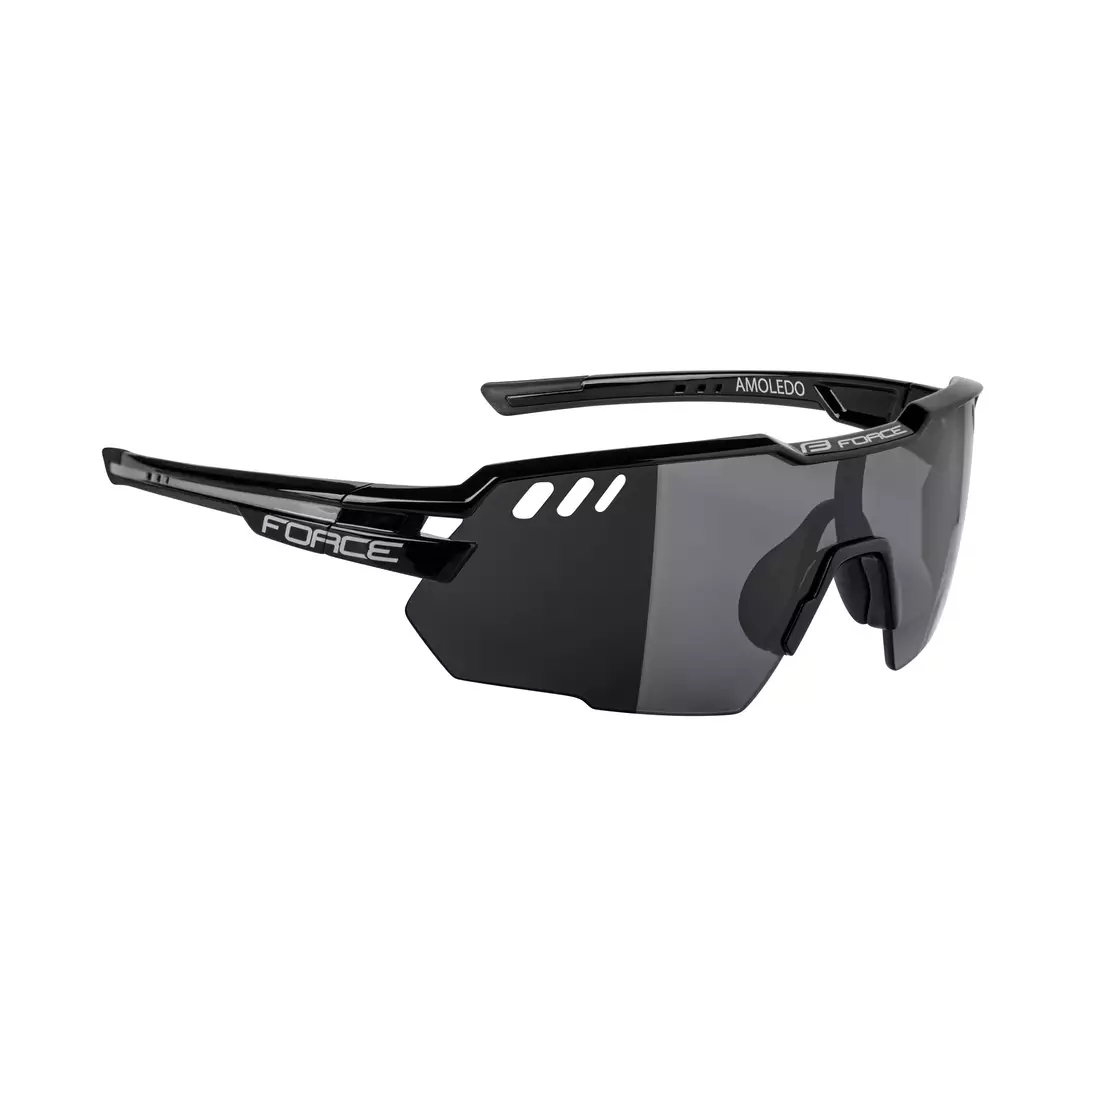 FORCE sports glasses AMOLEDO, black and gray 910881